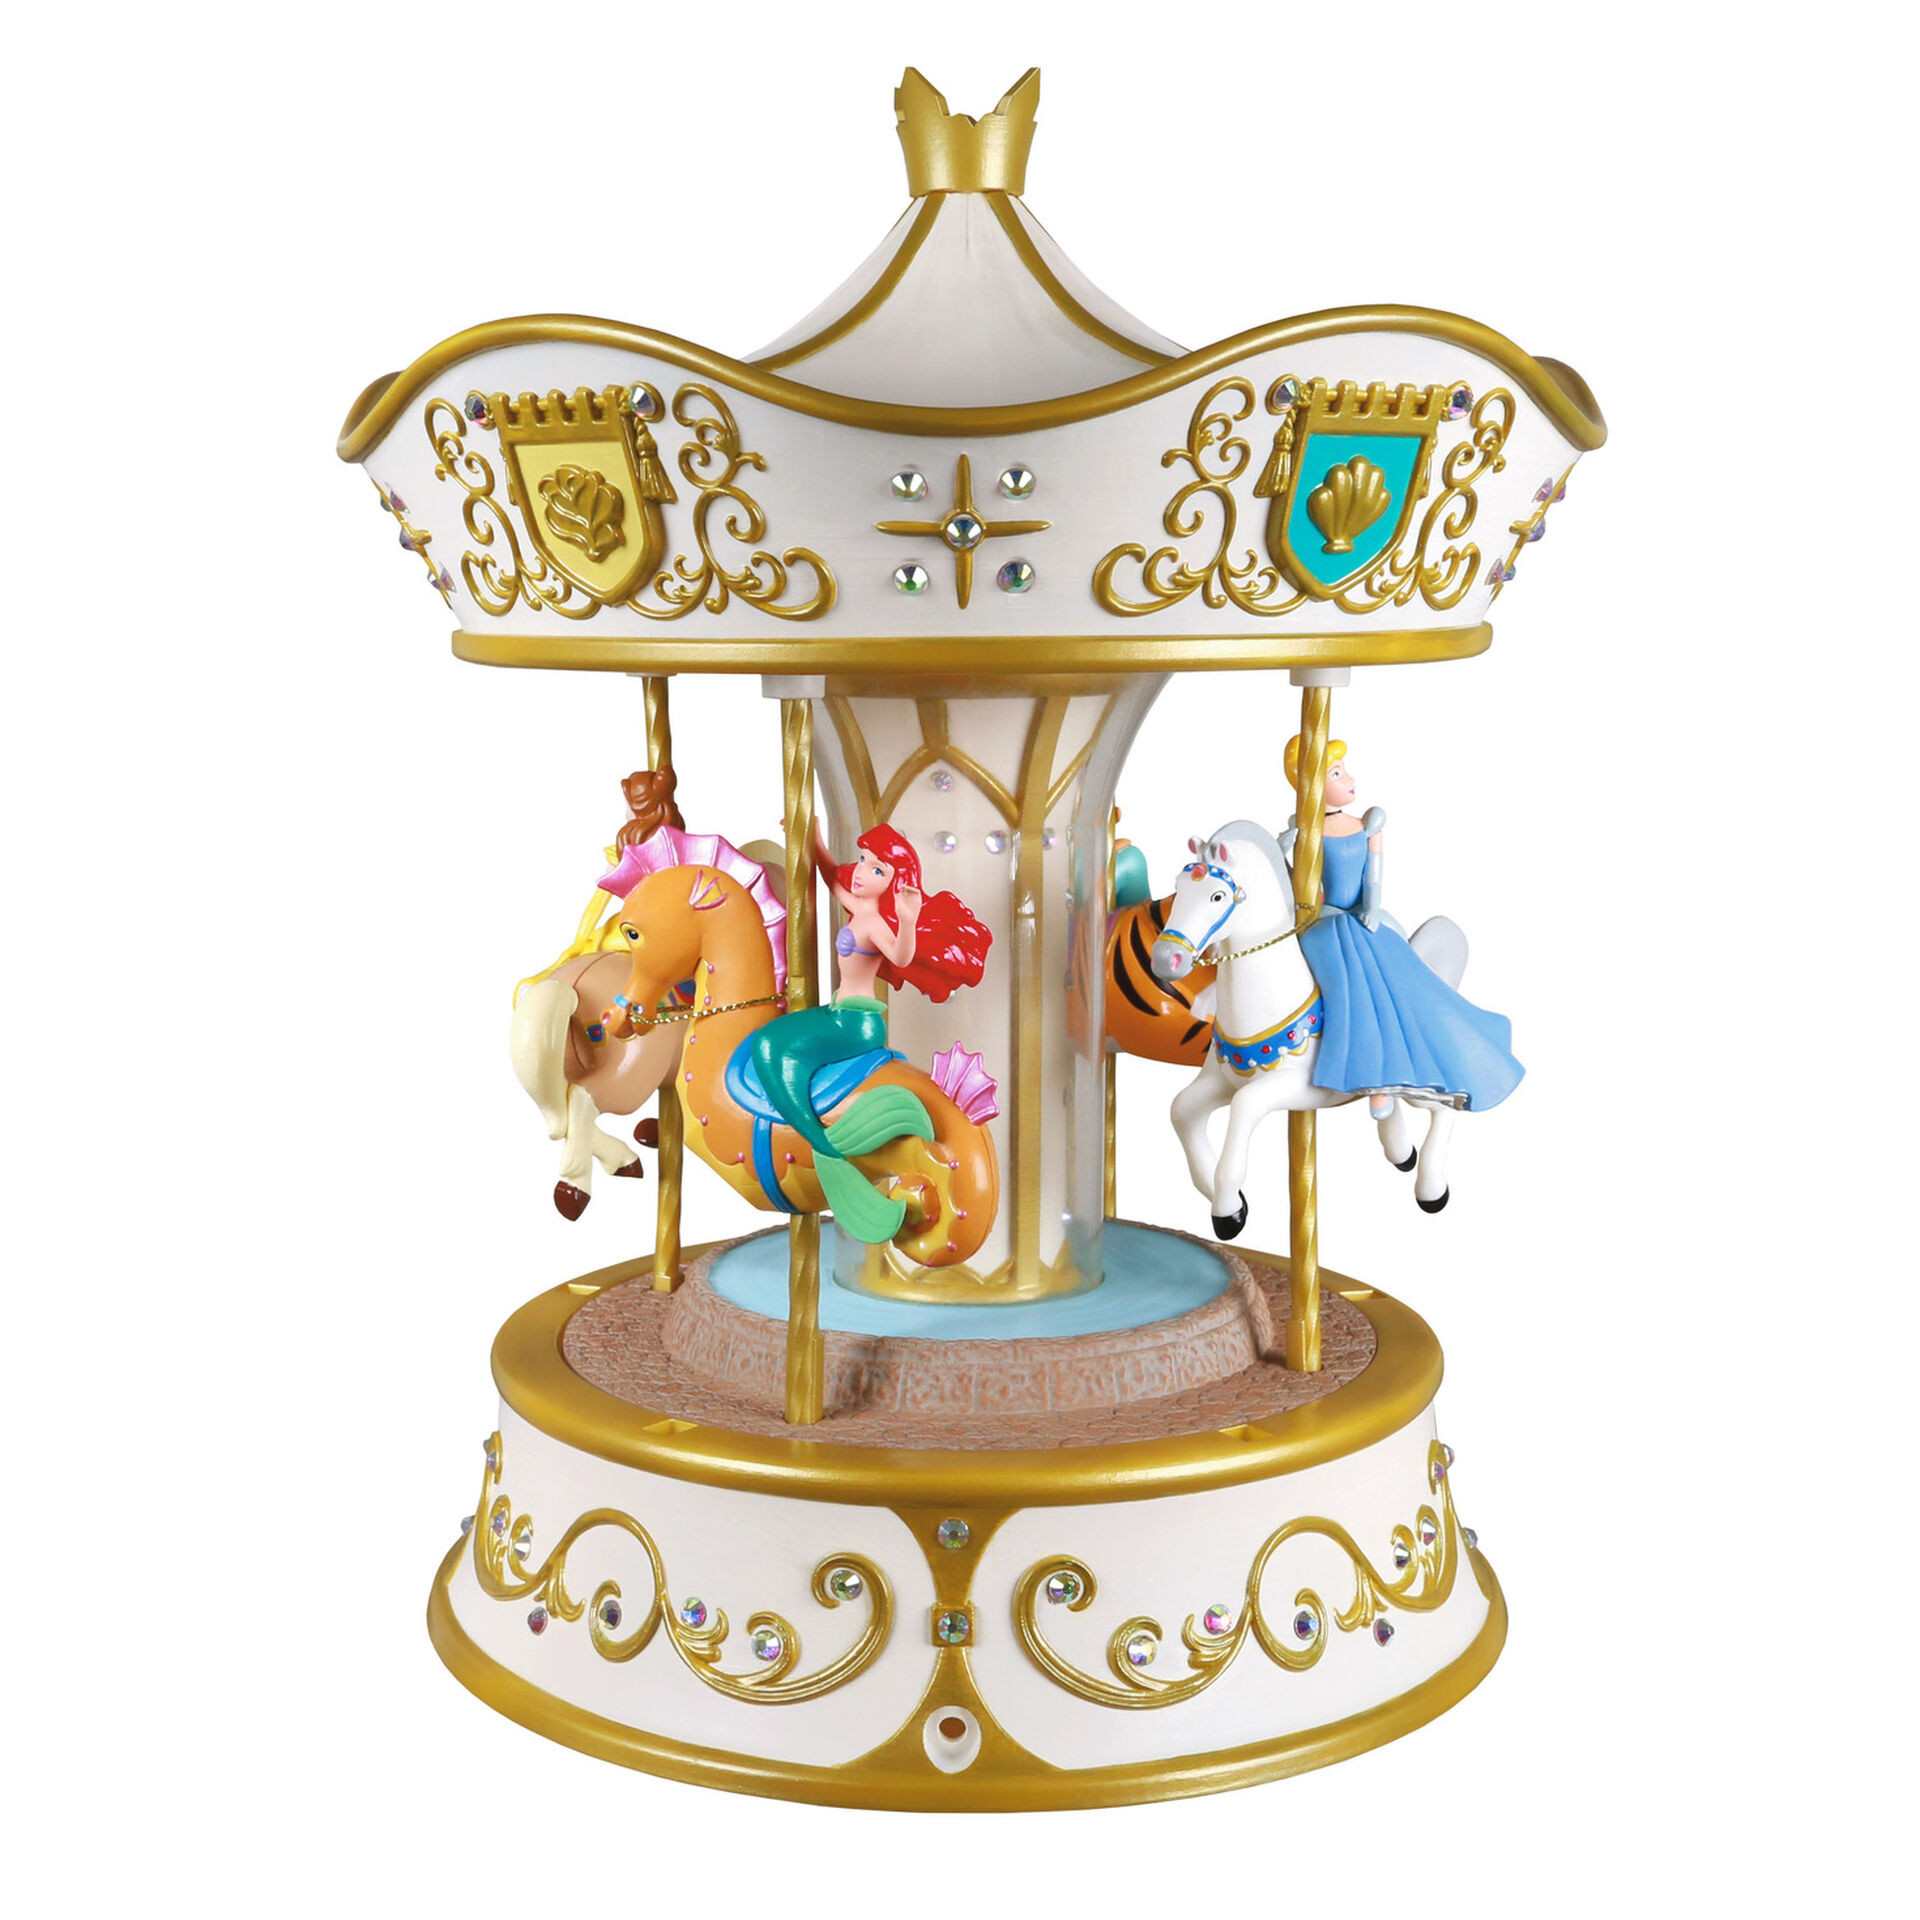 Bolo Carrossel de Balanços Disney! (Disney Swing Carousel …